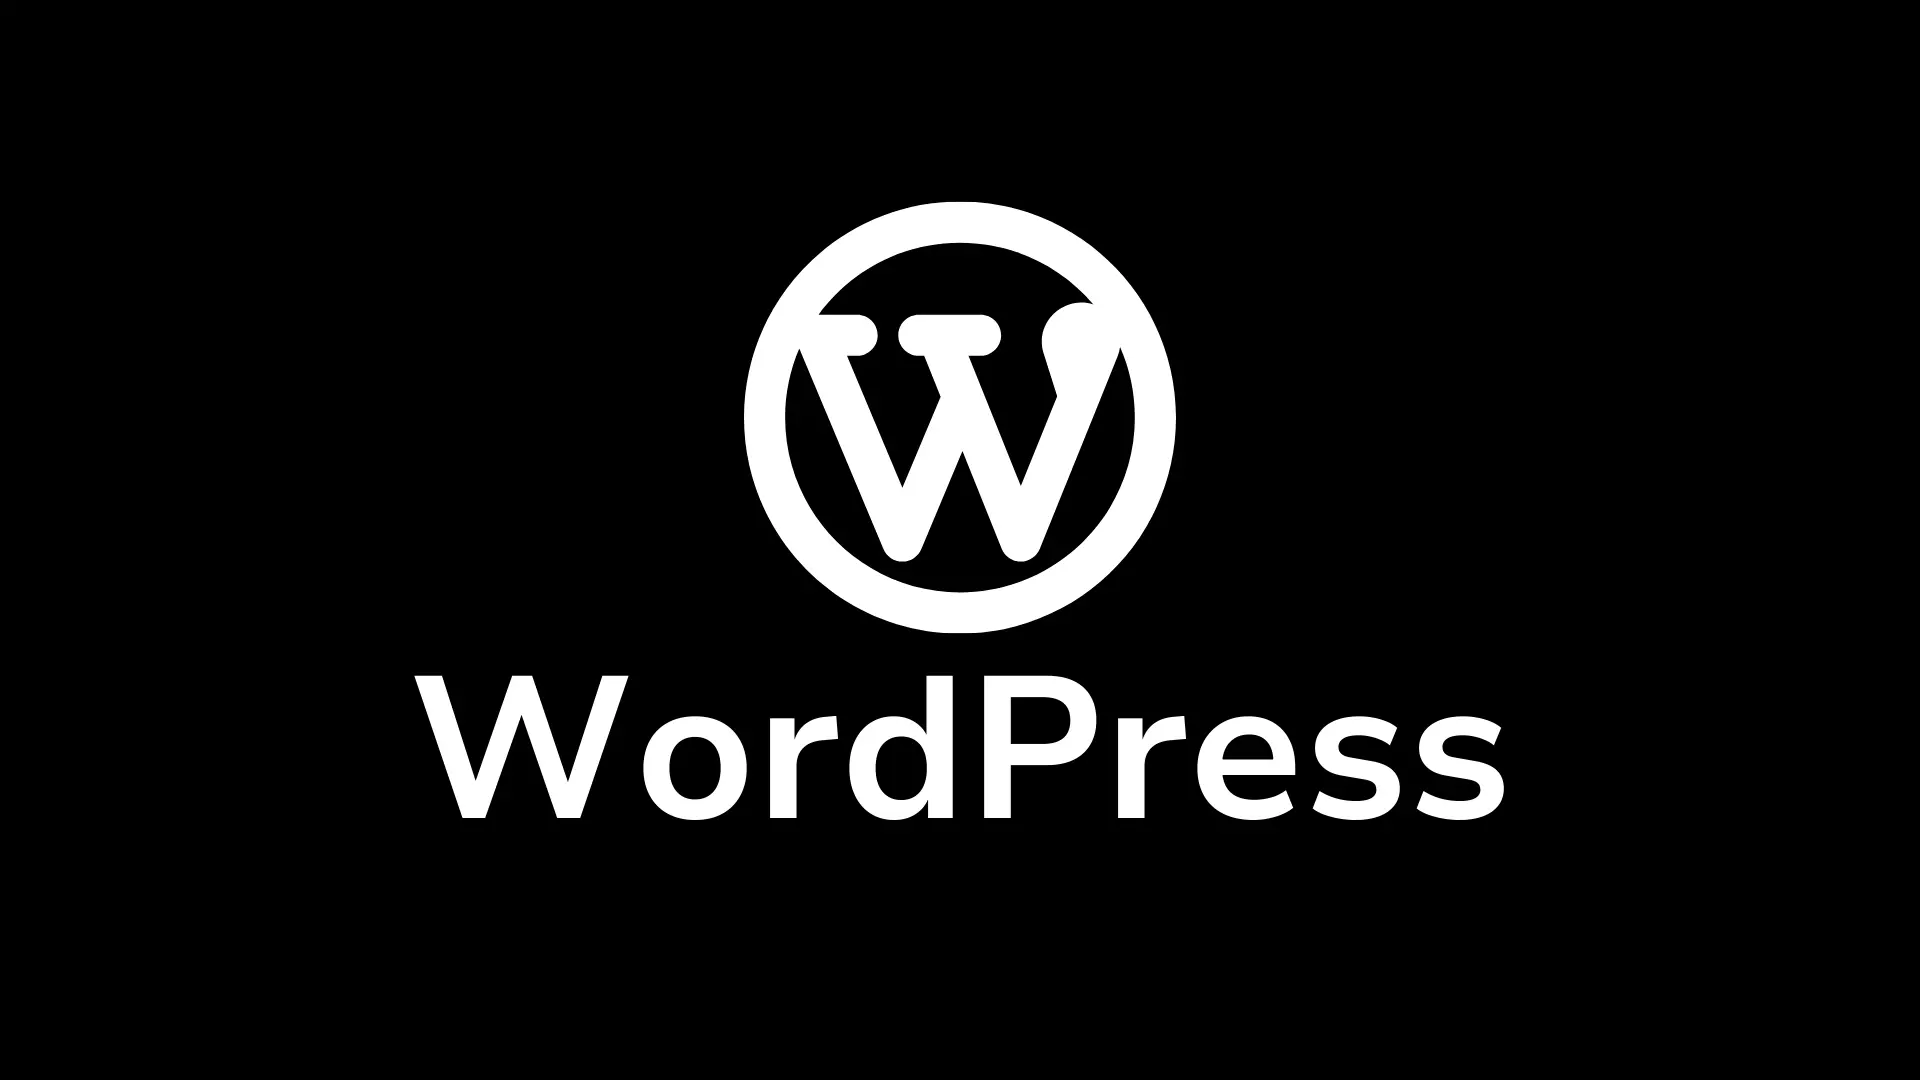 WordPress brand